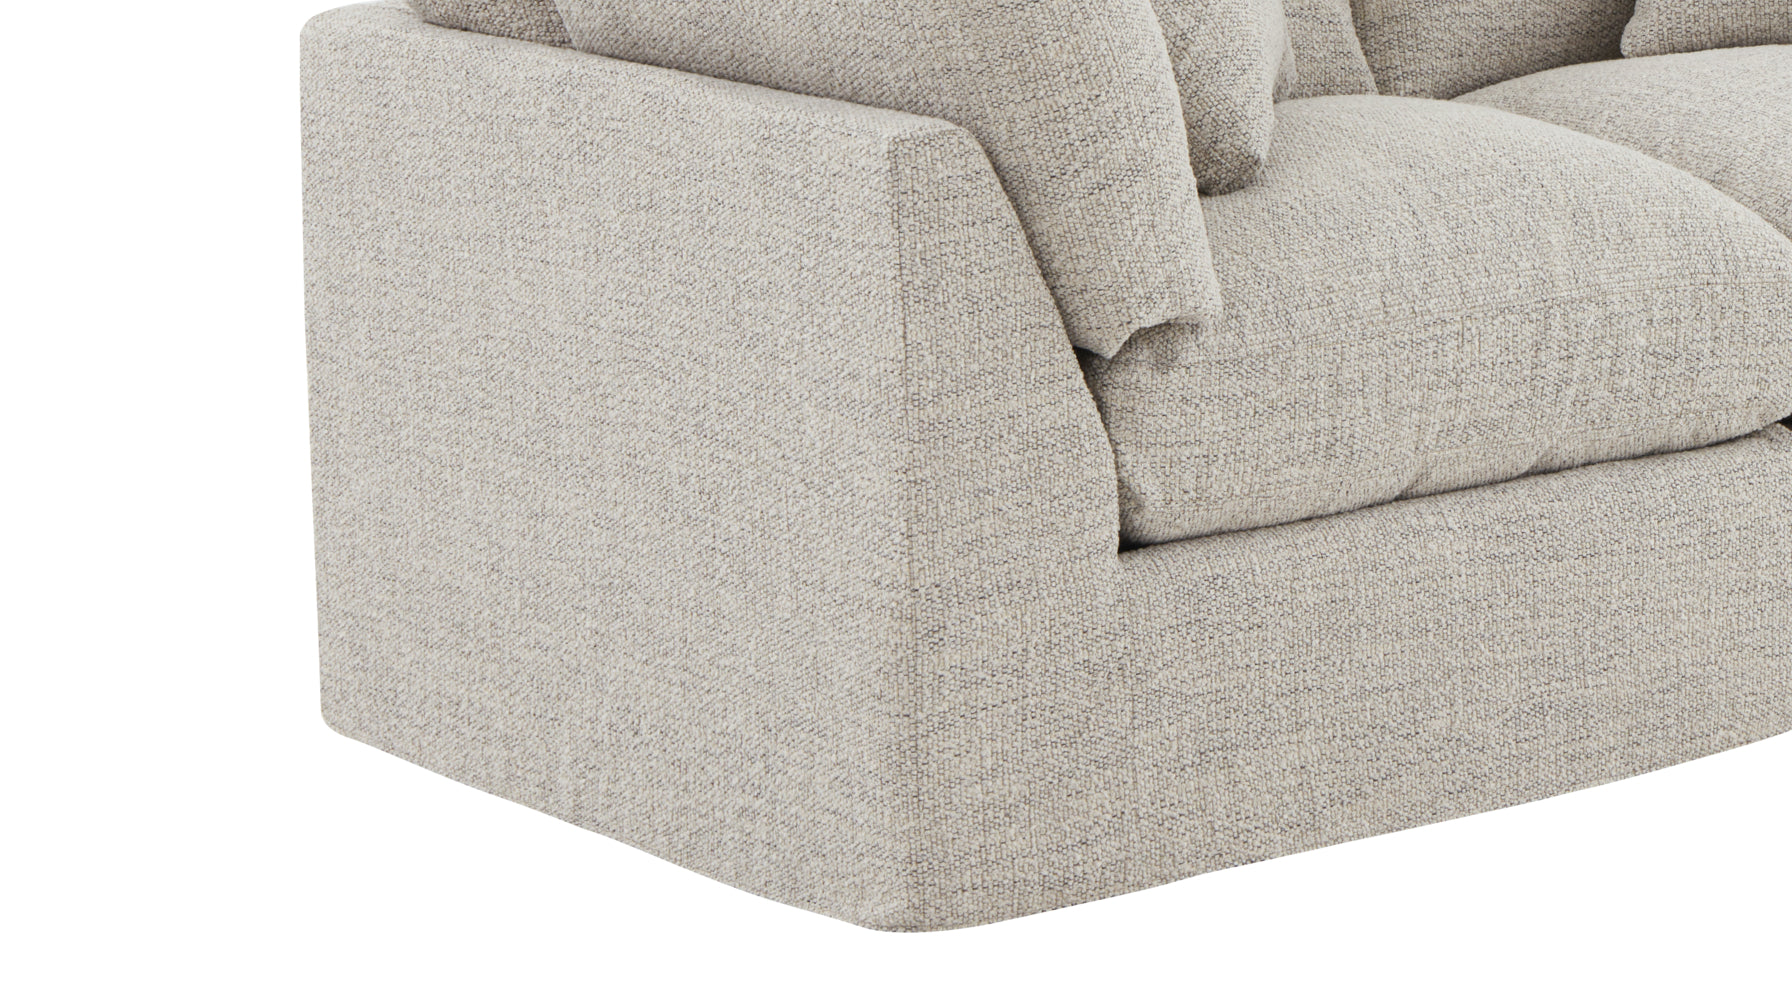 Get Together™ 2-Piece Modular Sofa, Standard, Oatmeal - Image 8